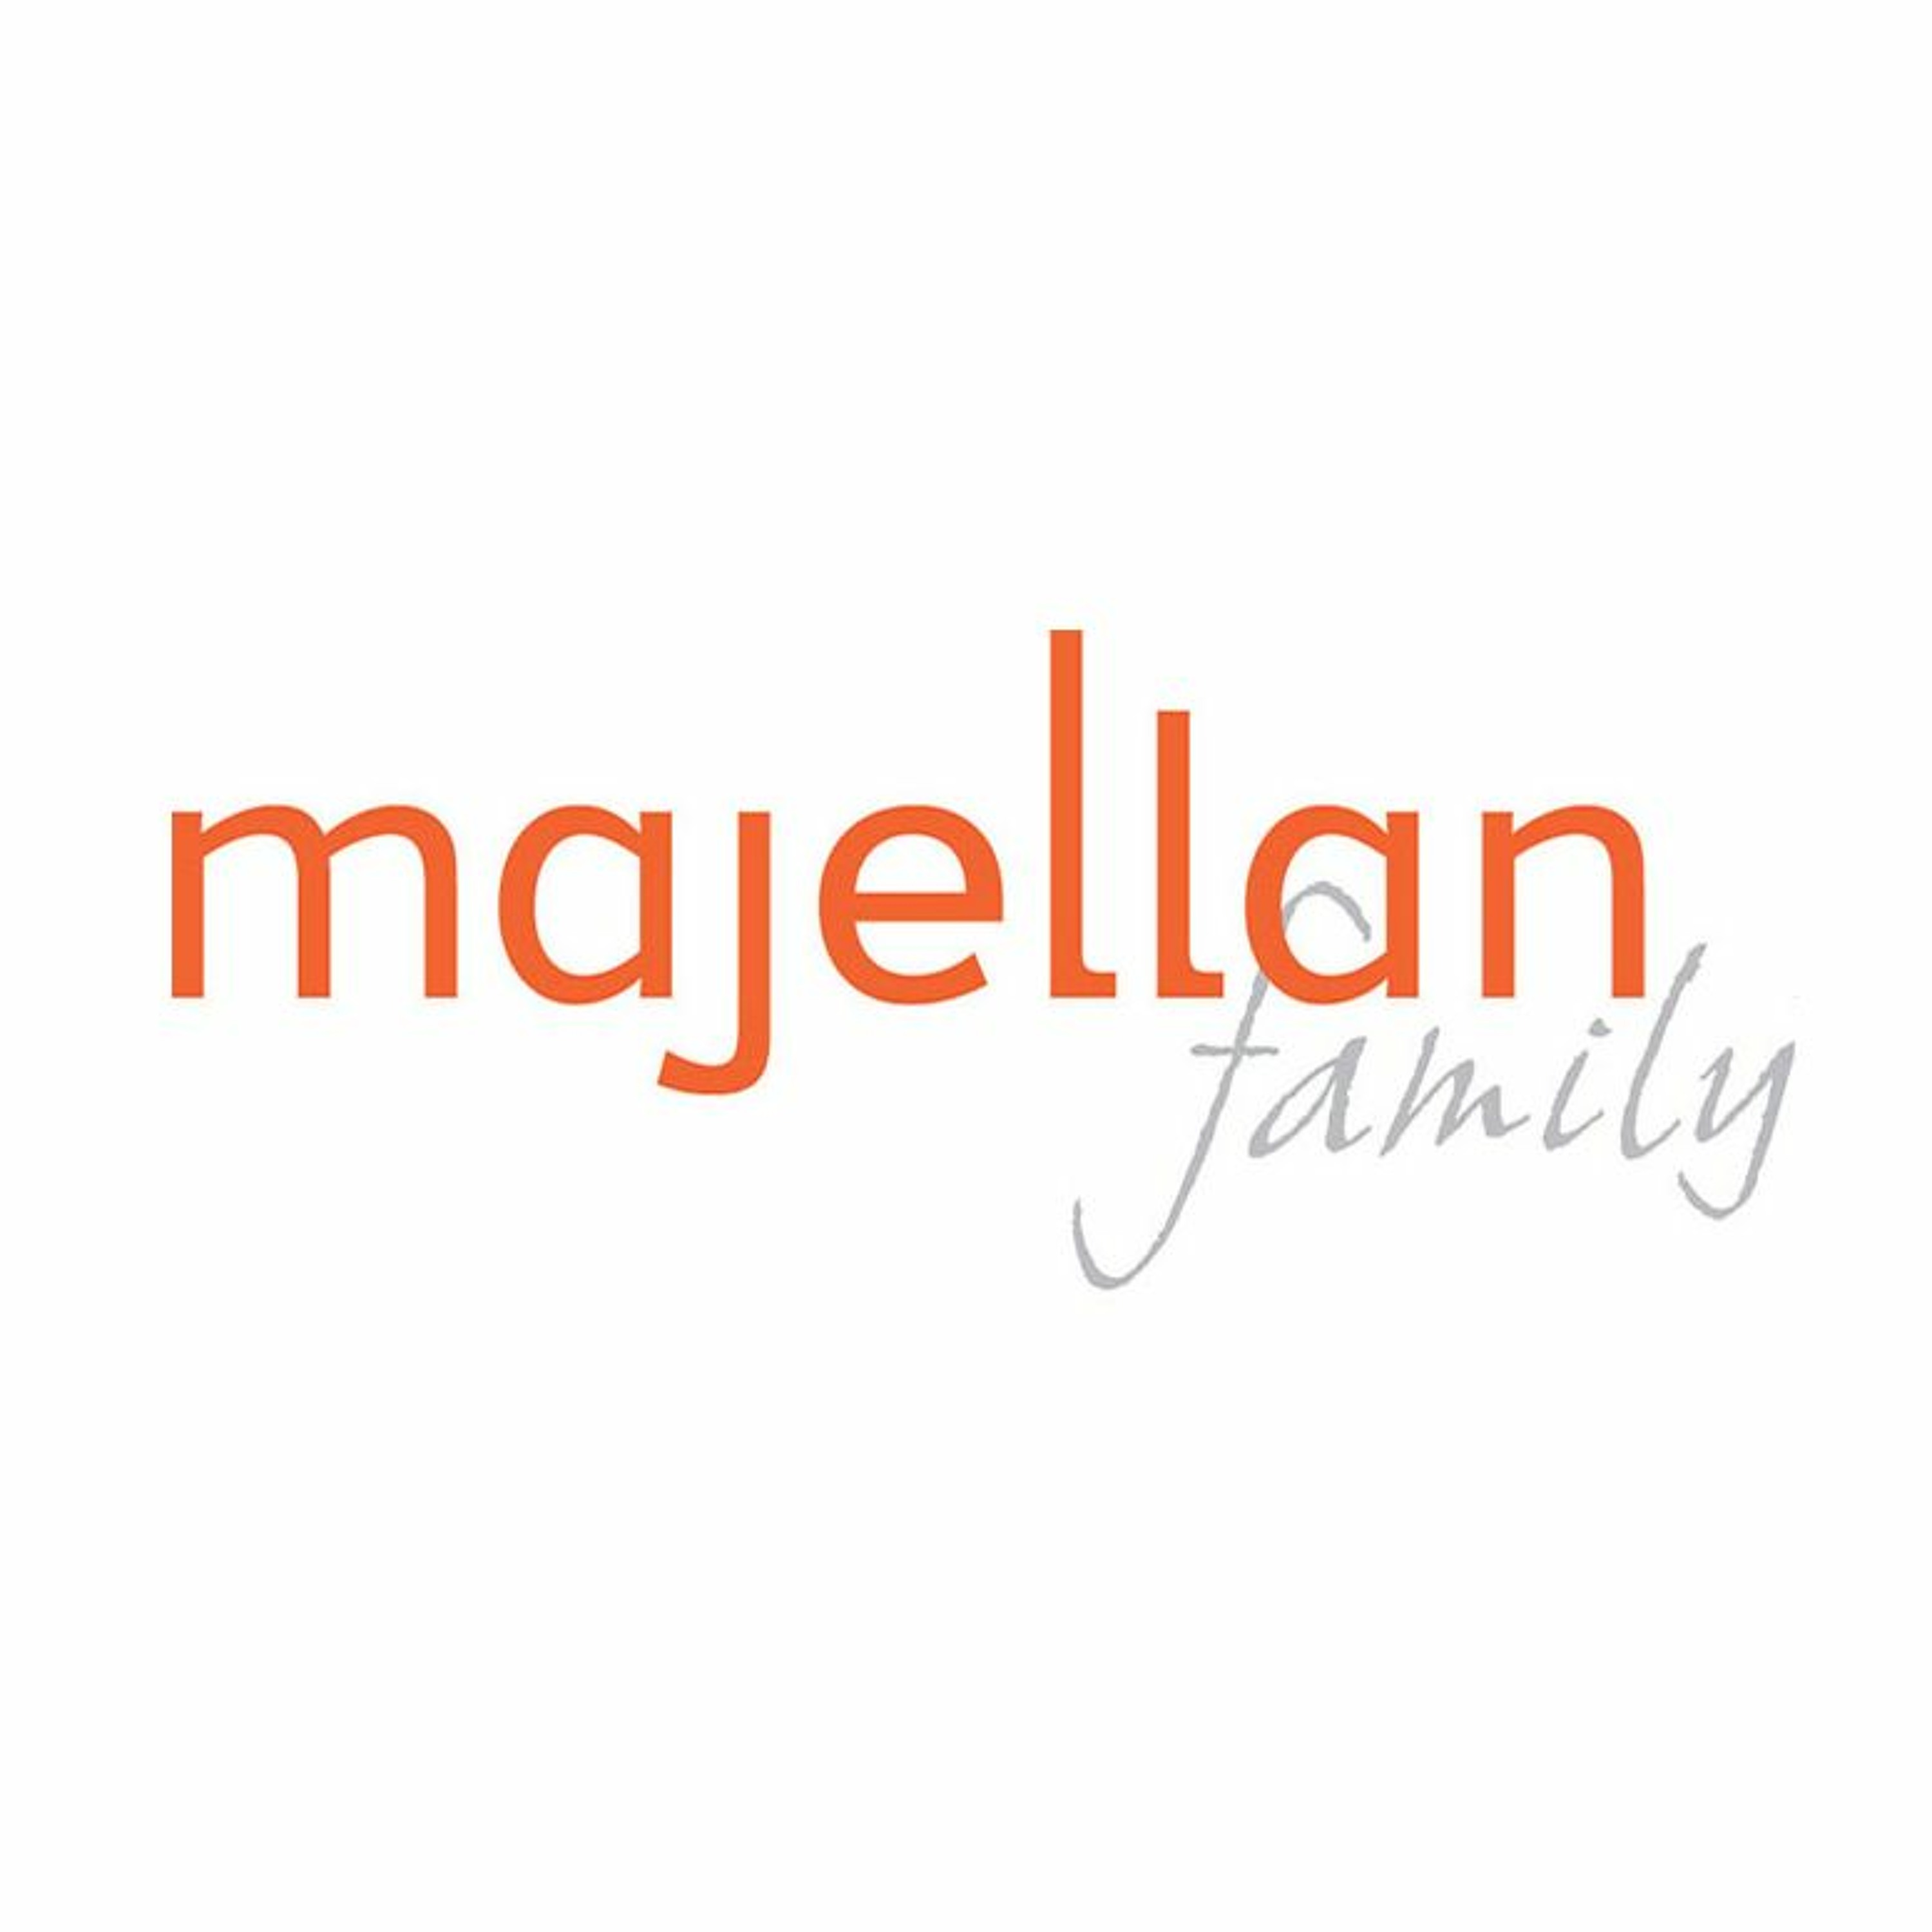 Introducing the Majellan Podcast